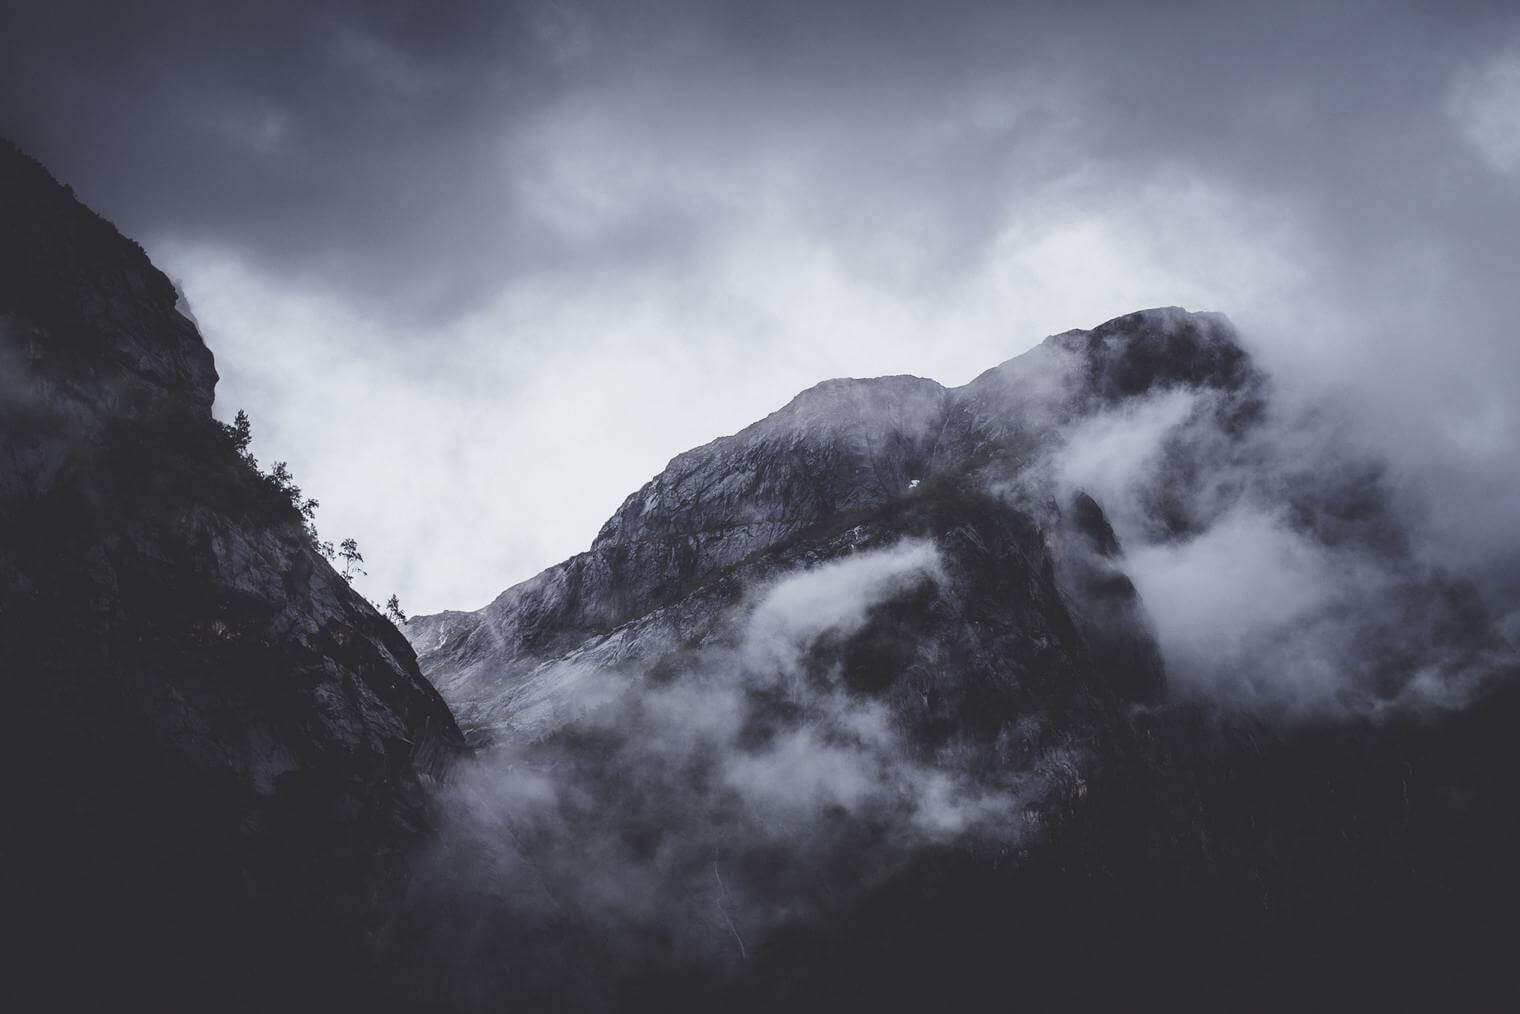 Dark Mountain Landscape in the Clouds (Northlandscapes Signature Lightroom Presets for Landscape Photography)